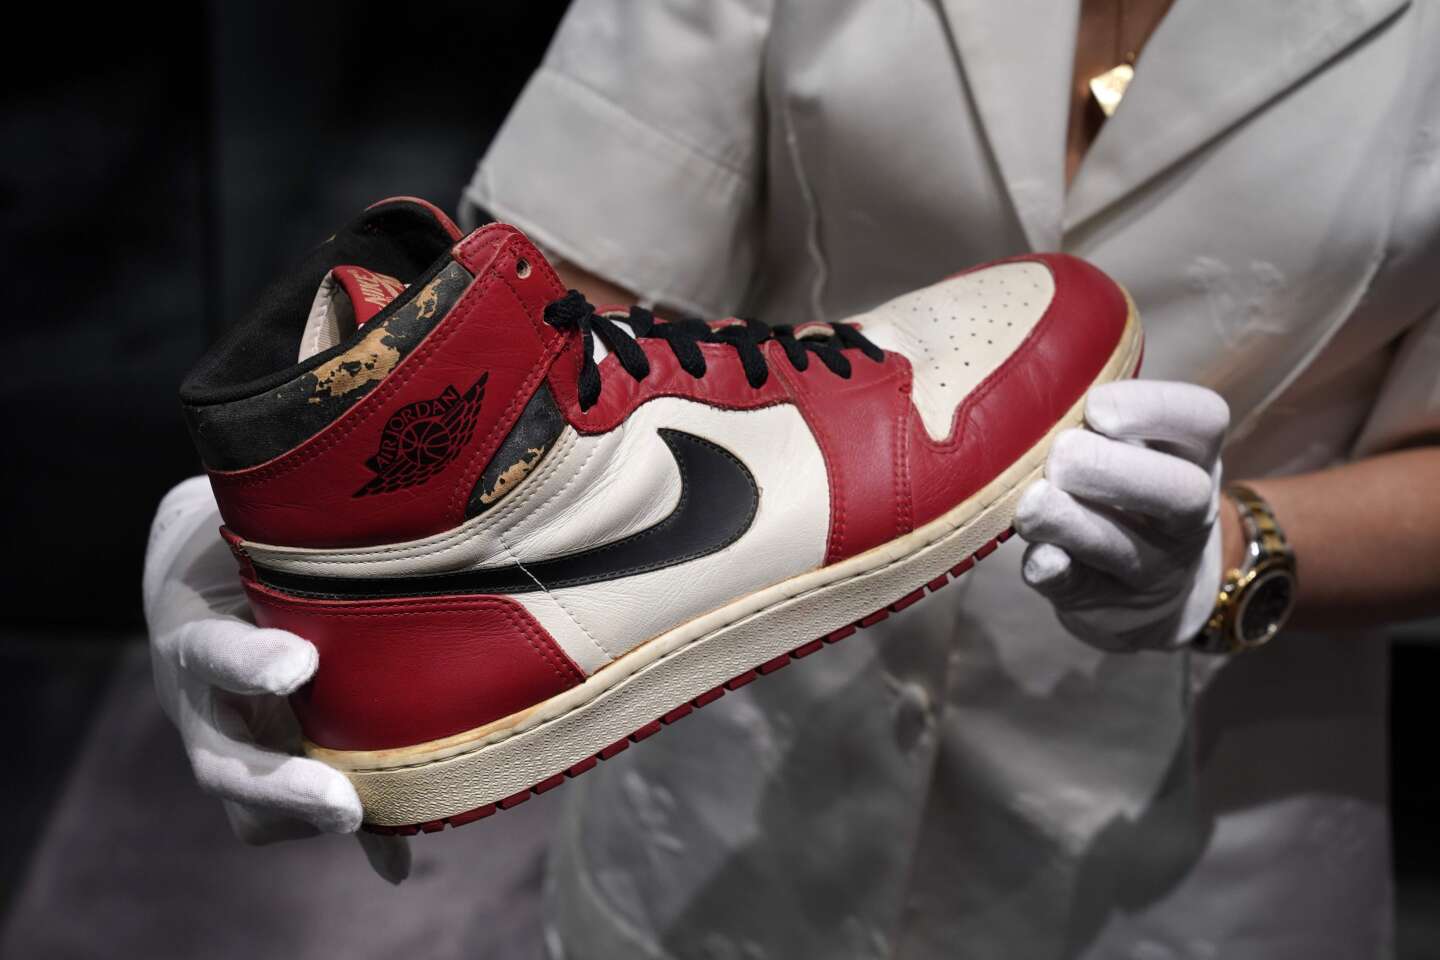 pressure furrow napkin Une paire d'Air Jordan 1 vendue 615 000 dollars, un record